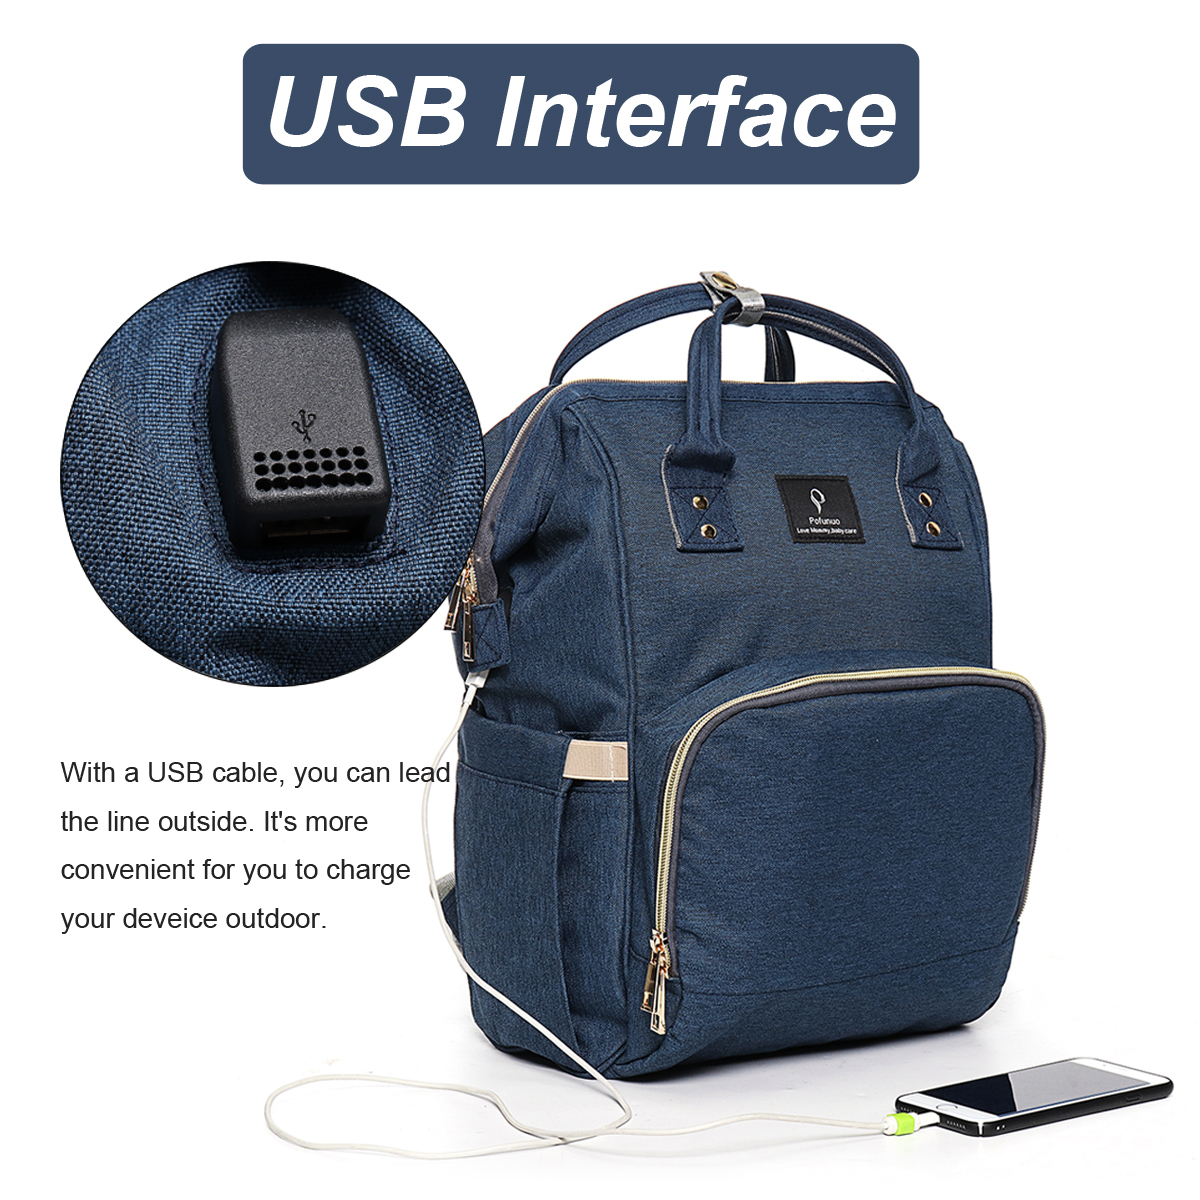 Pofunuo-Waterproof-Mummy-Baby-Diaper-Backpack-with-USB-Interface-Charging-Waterproof-Oxford-Diaper-N-1245692-8